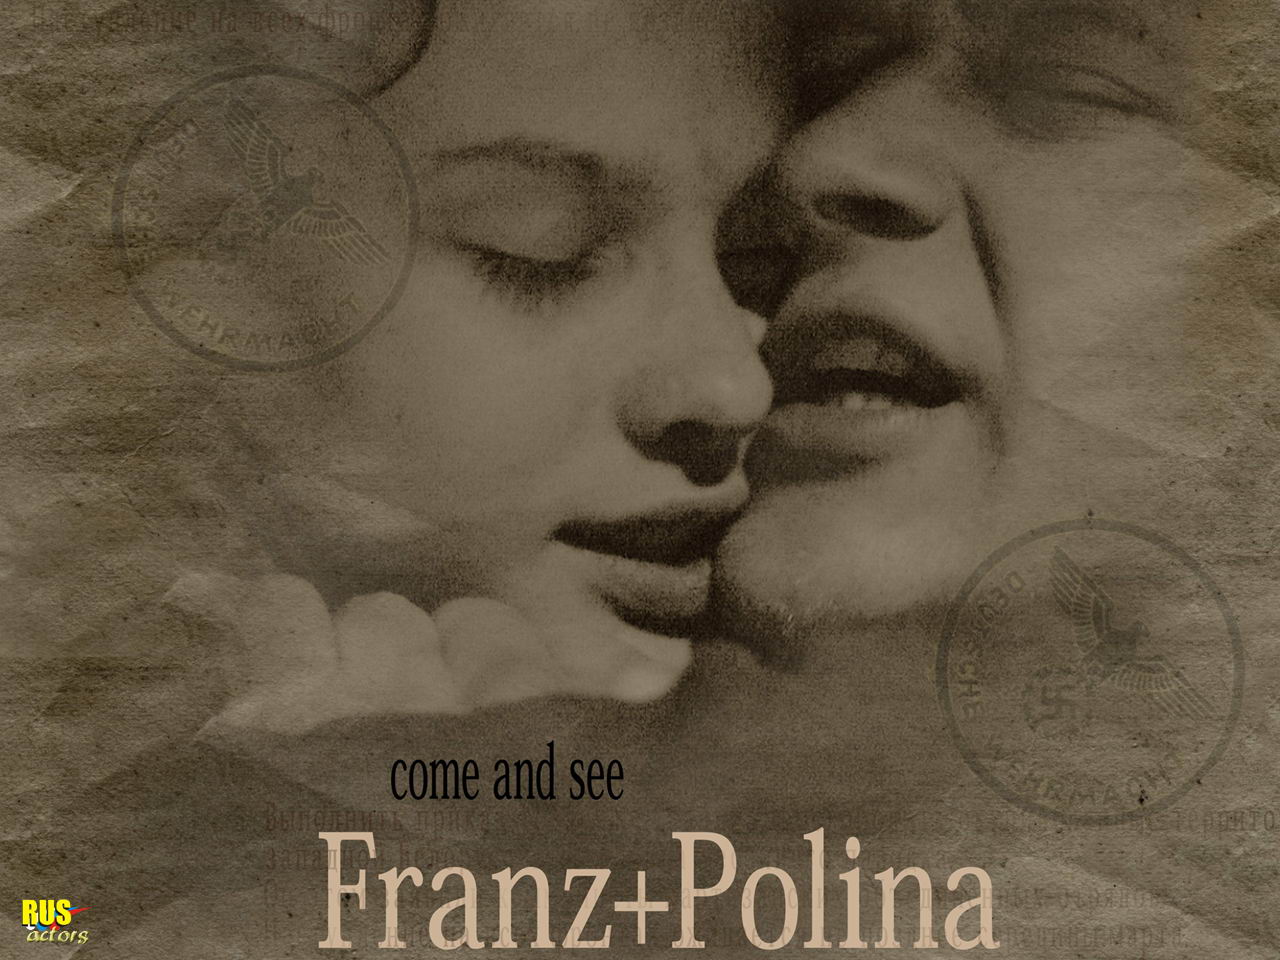    / Franz+Polina___Foto-Wallpapers - - -       / Franz+Polina      